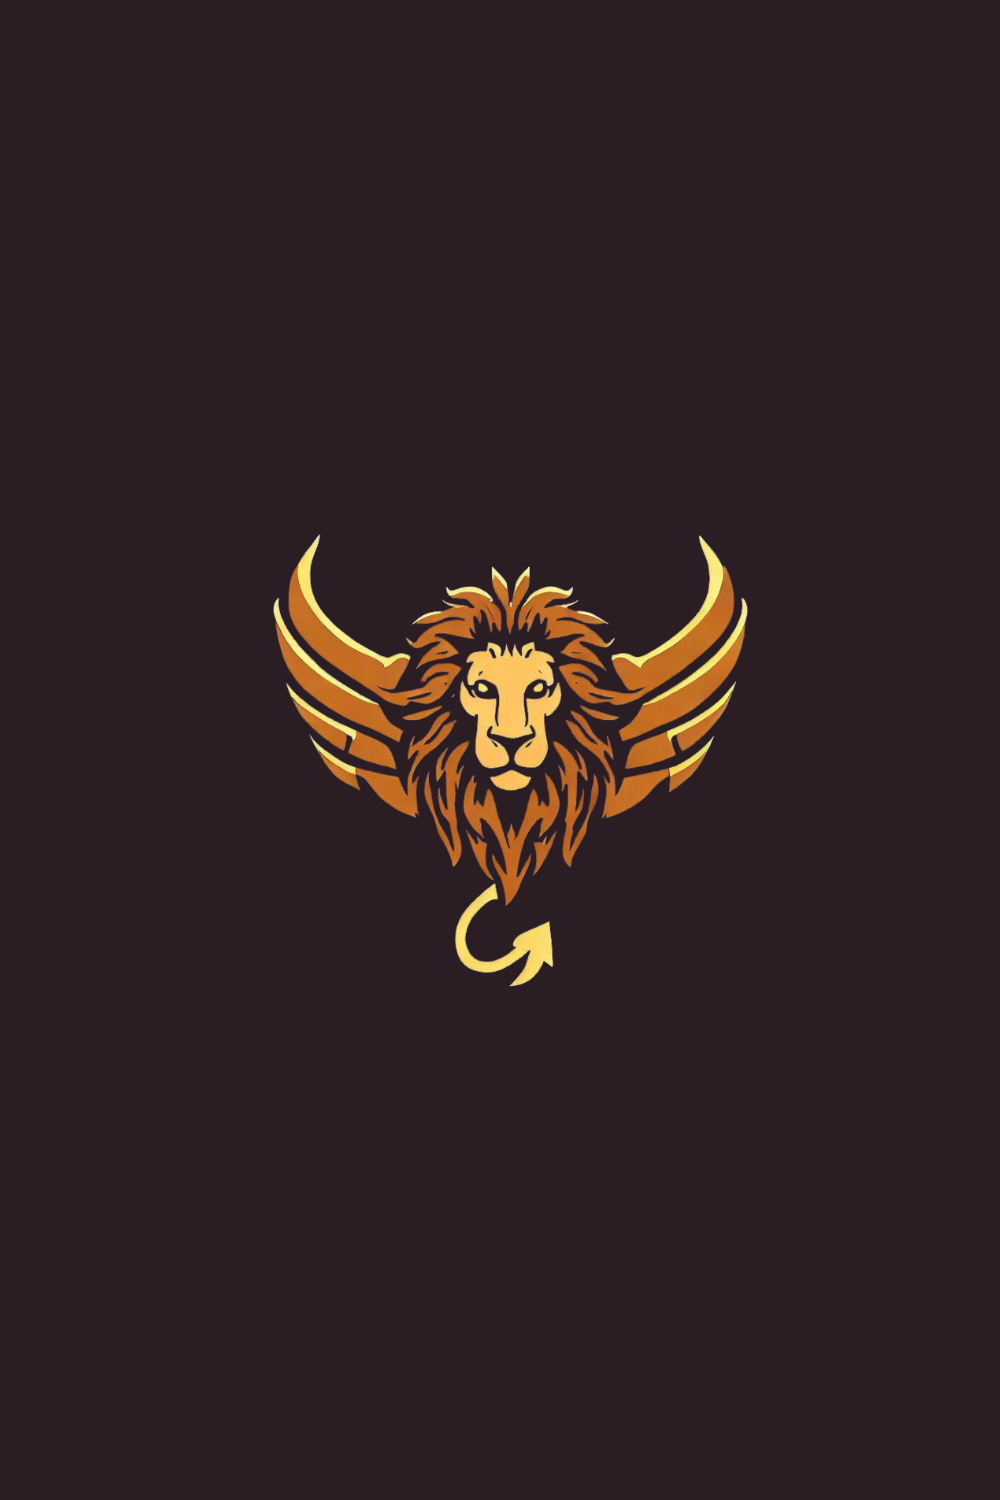 Lion logo pinterest preview image.